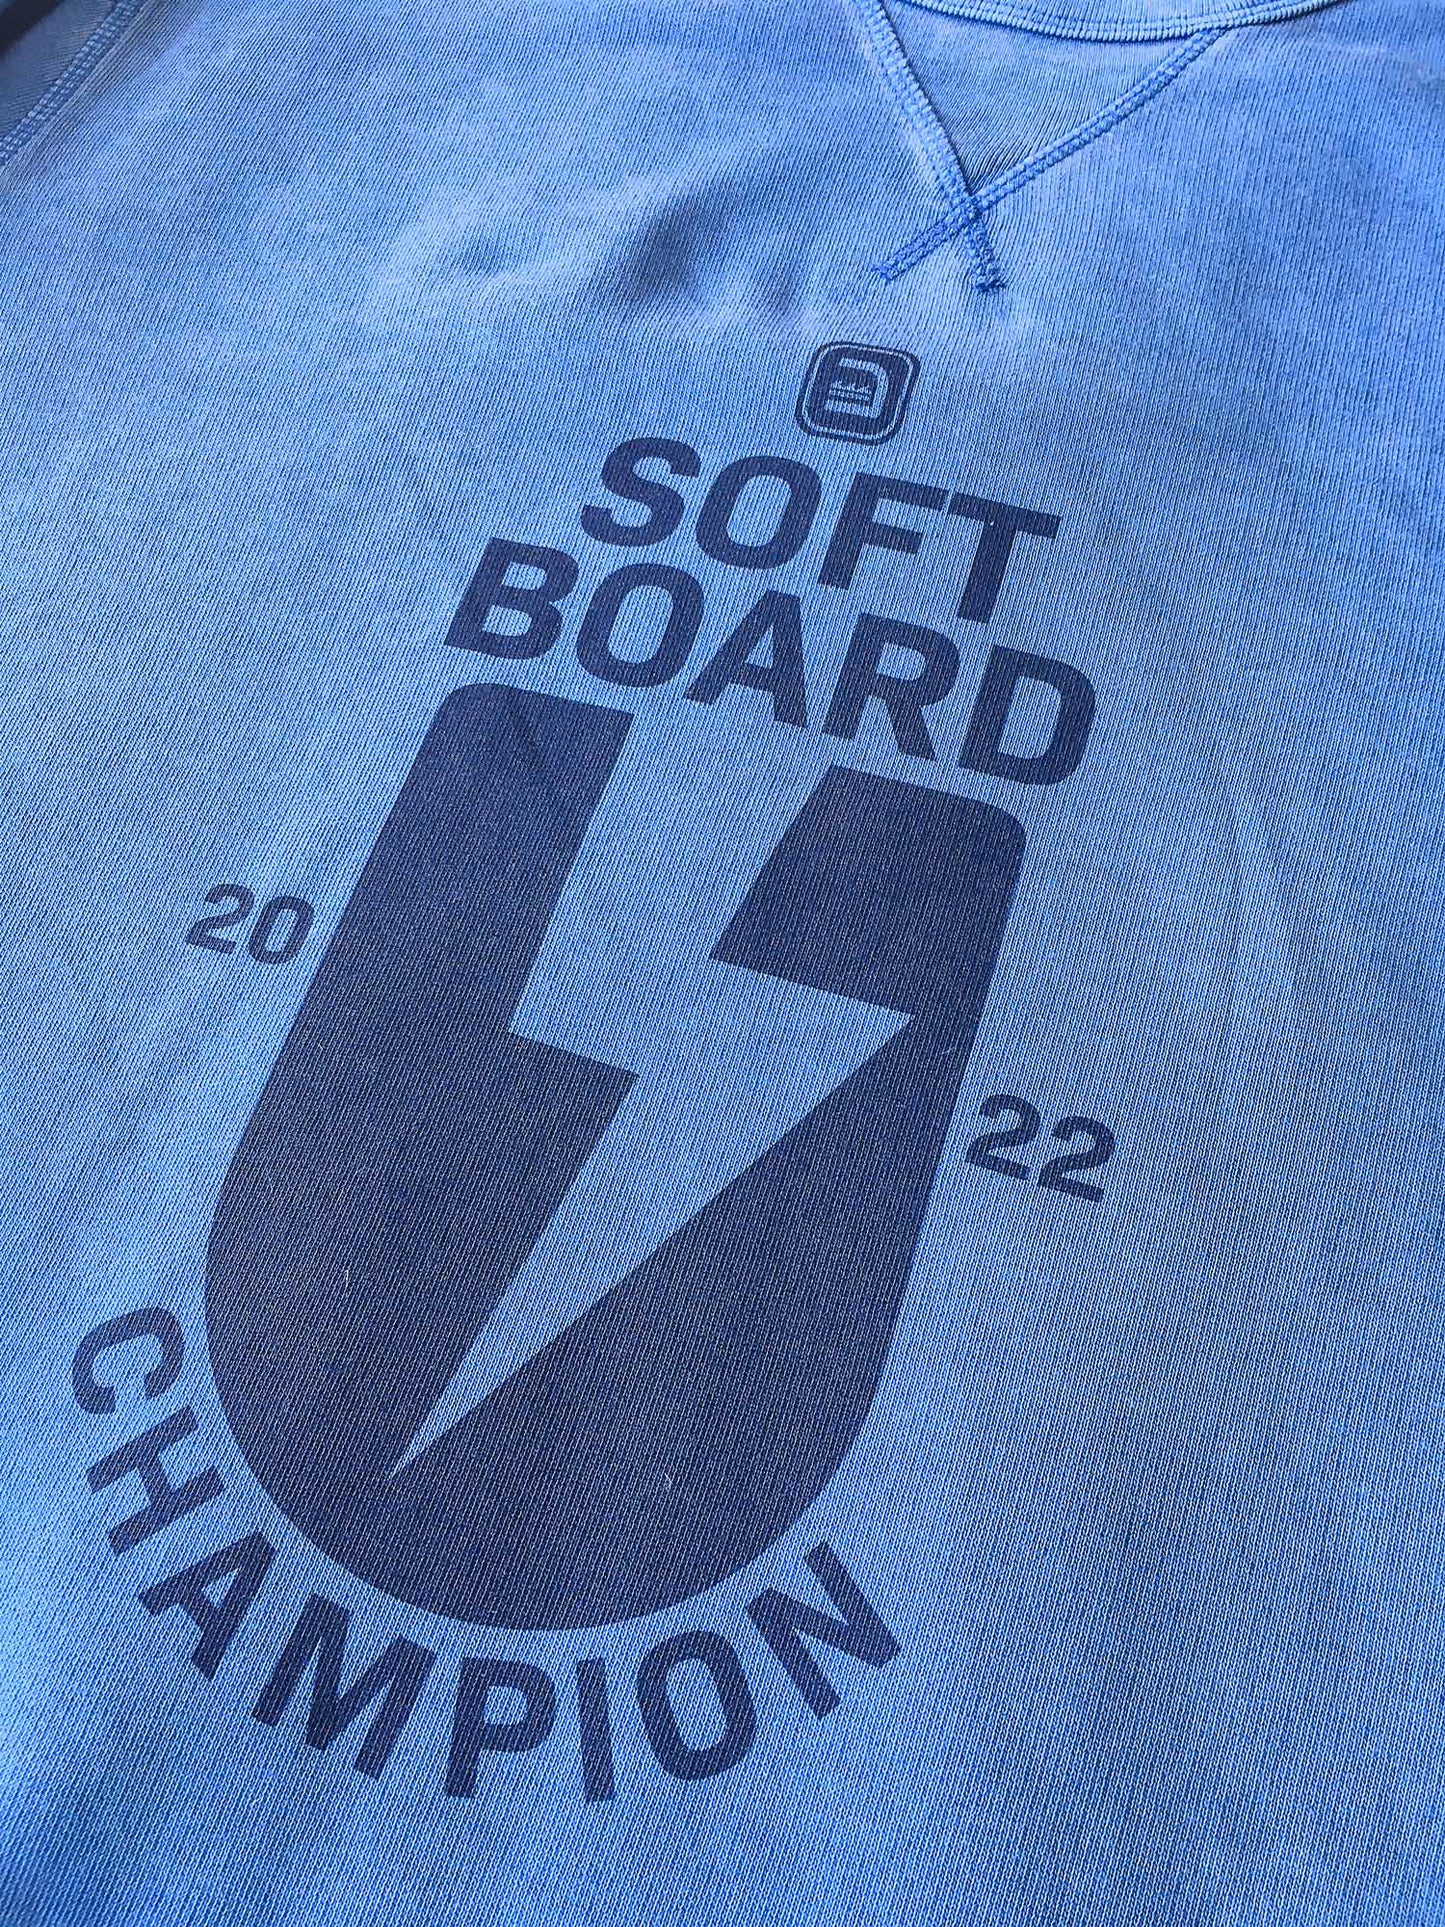 Champion vintage sweatshirt, Front side close-up